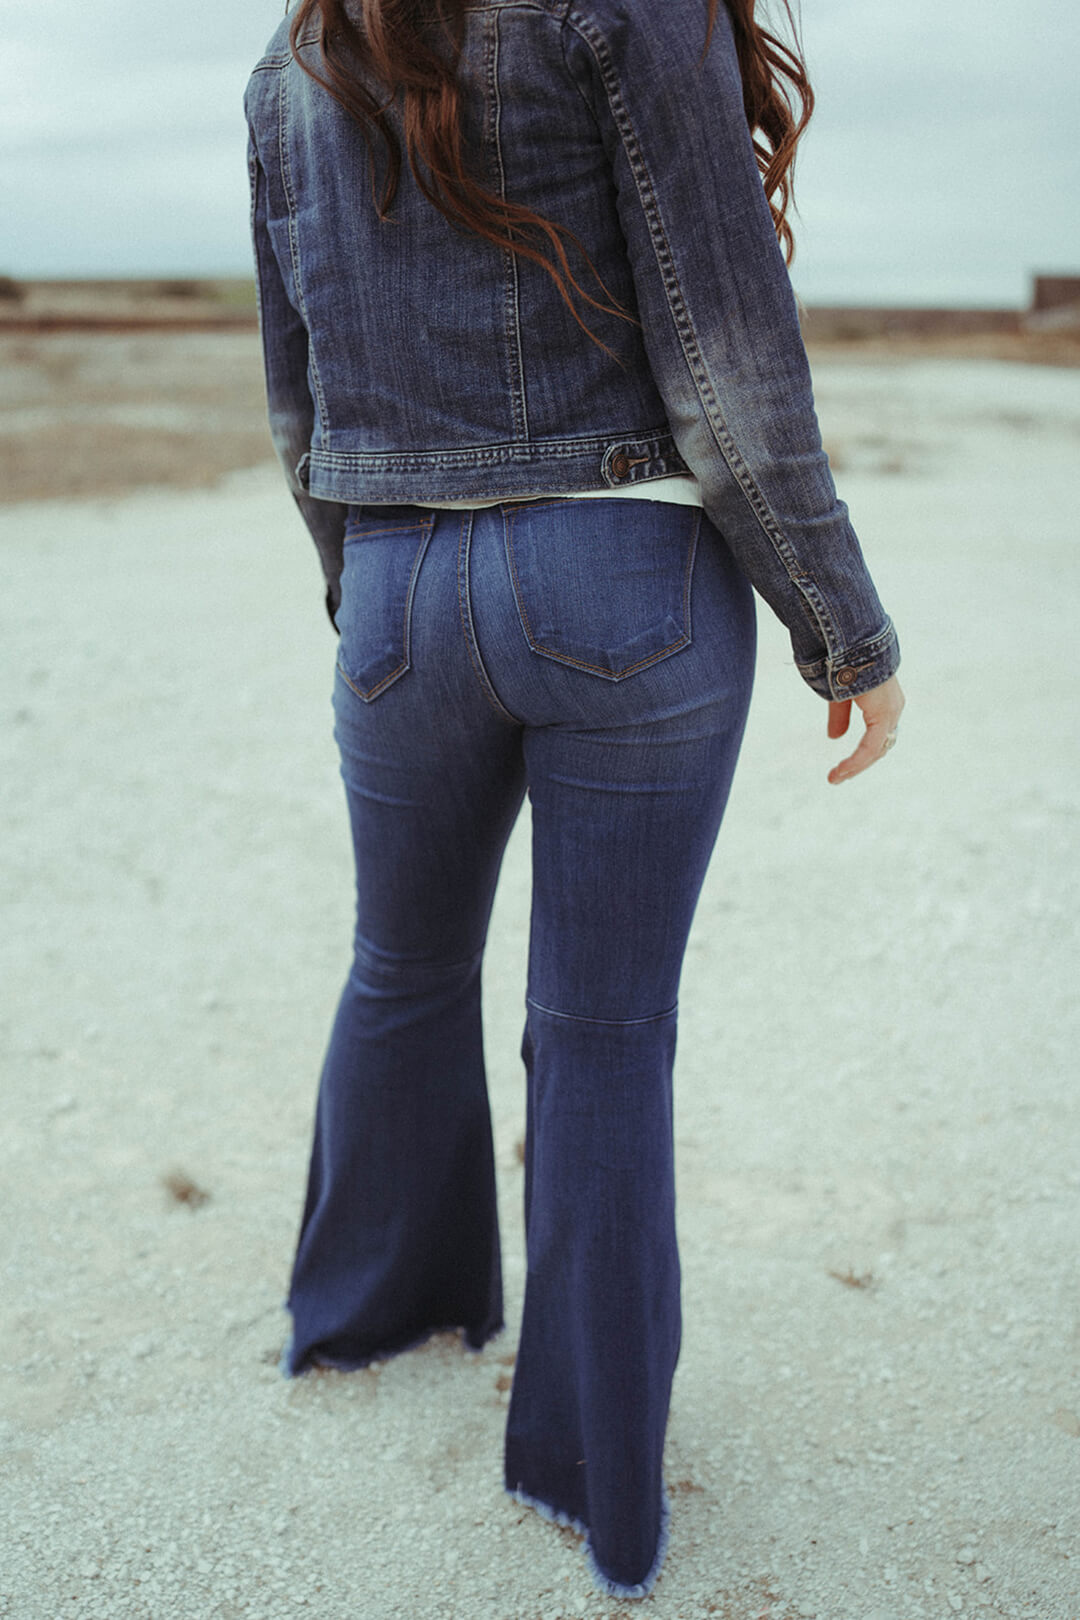 Blue 5 Pocket Stretch Flared Jeans